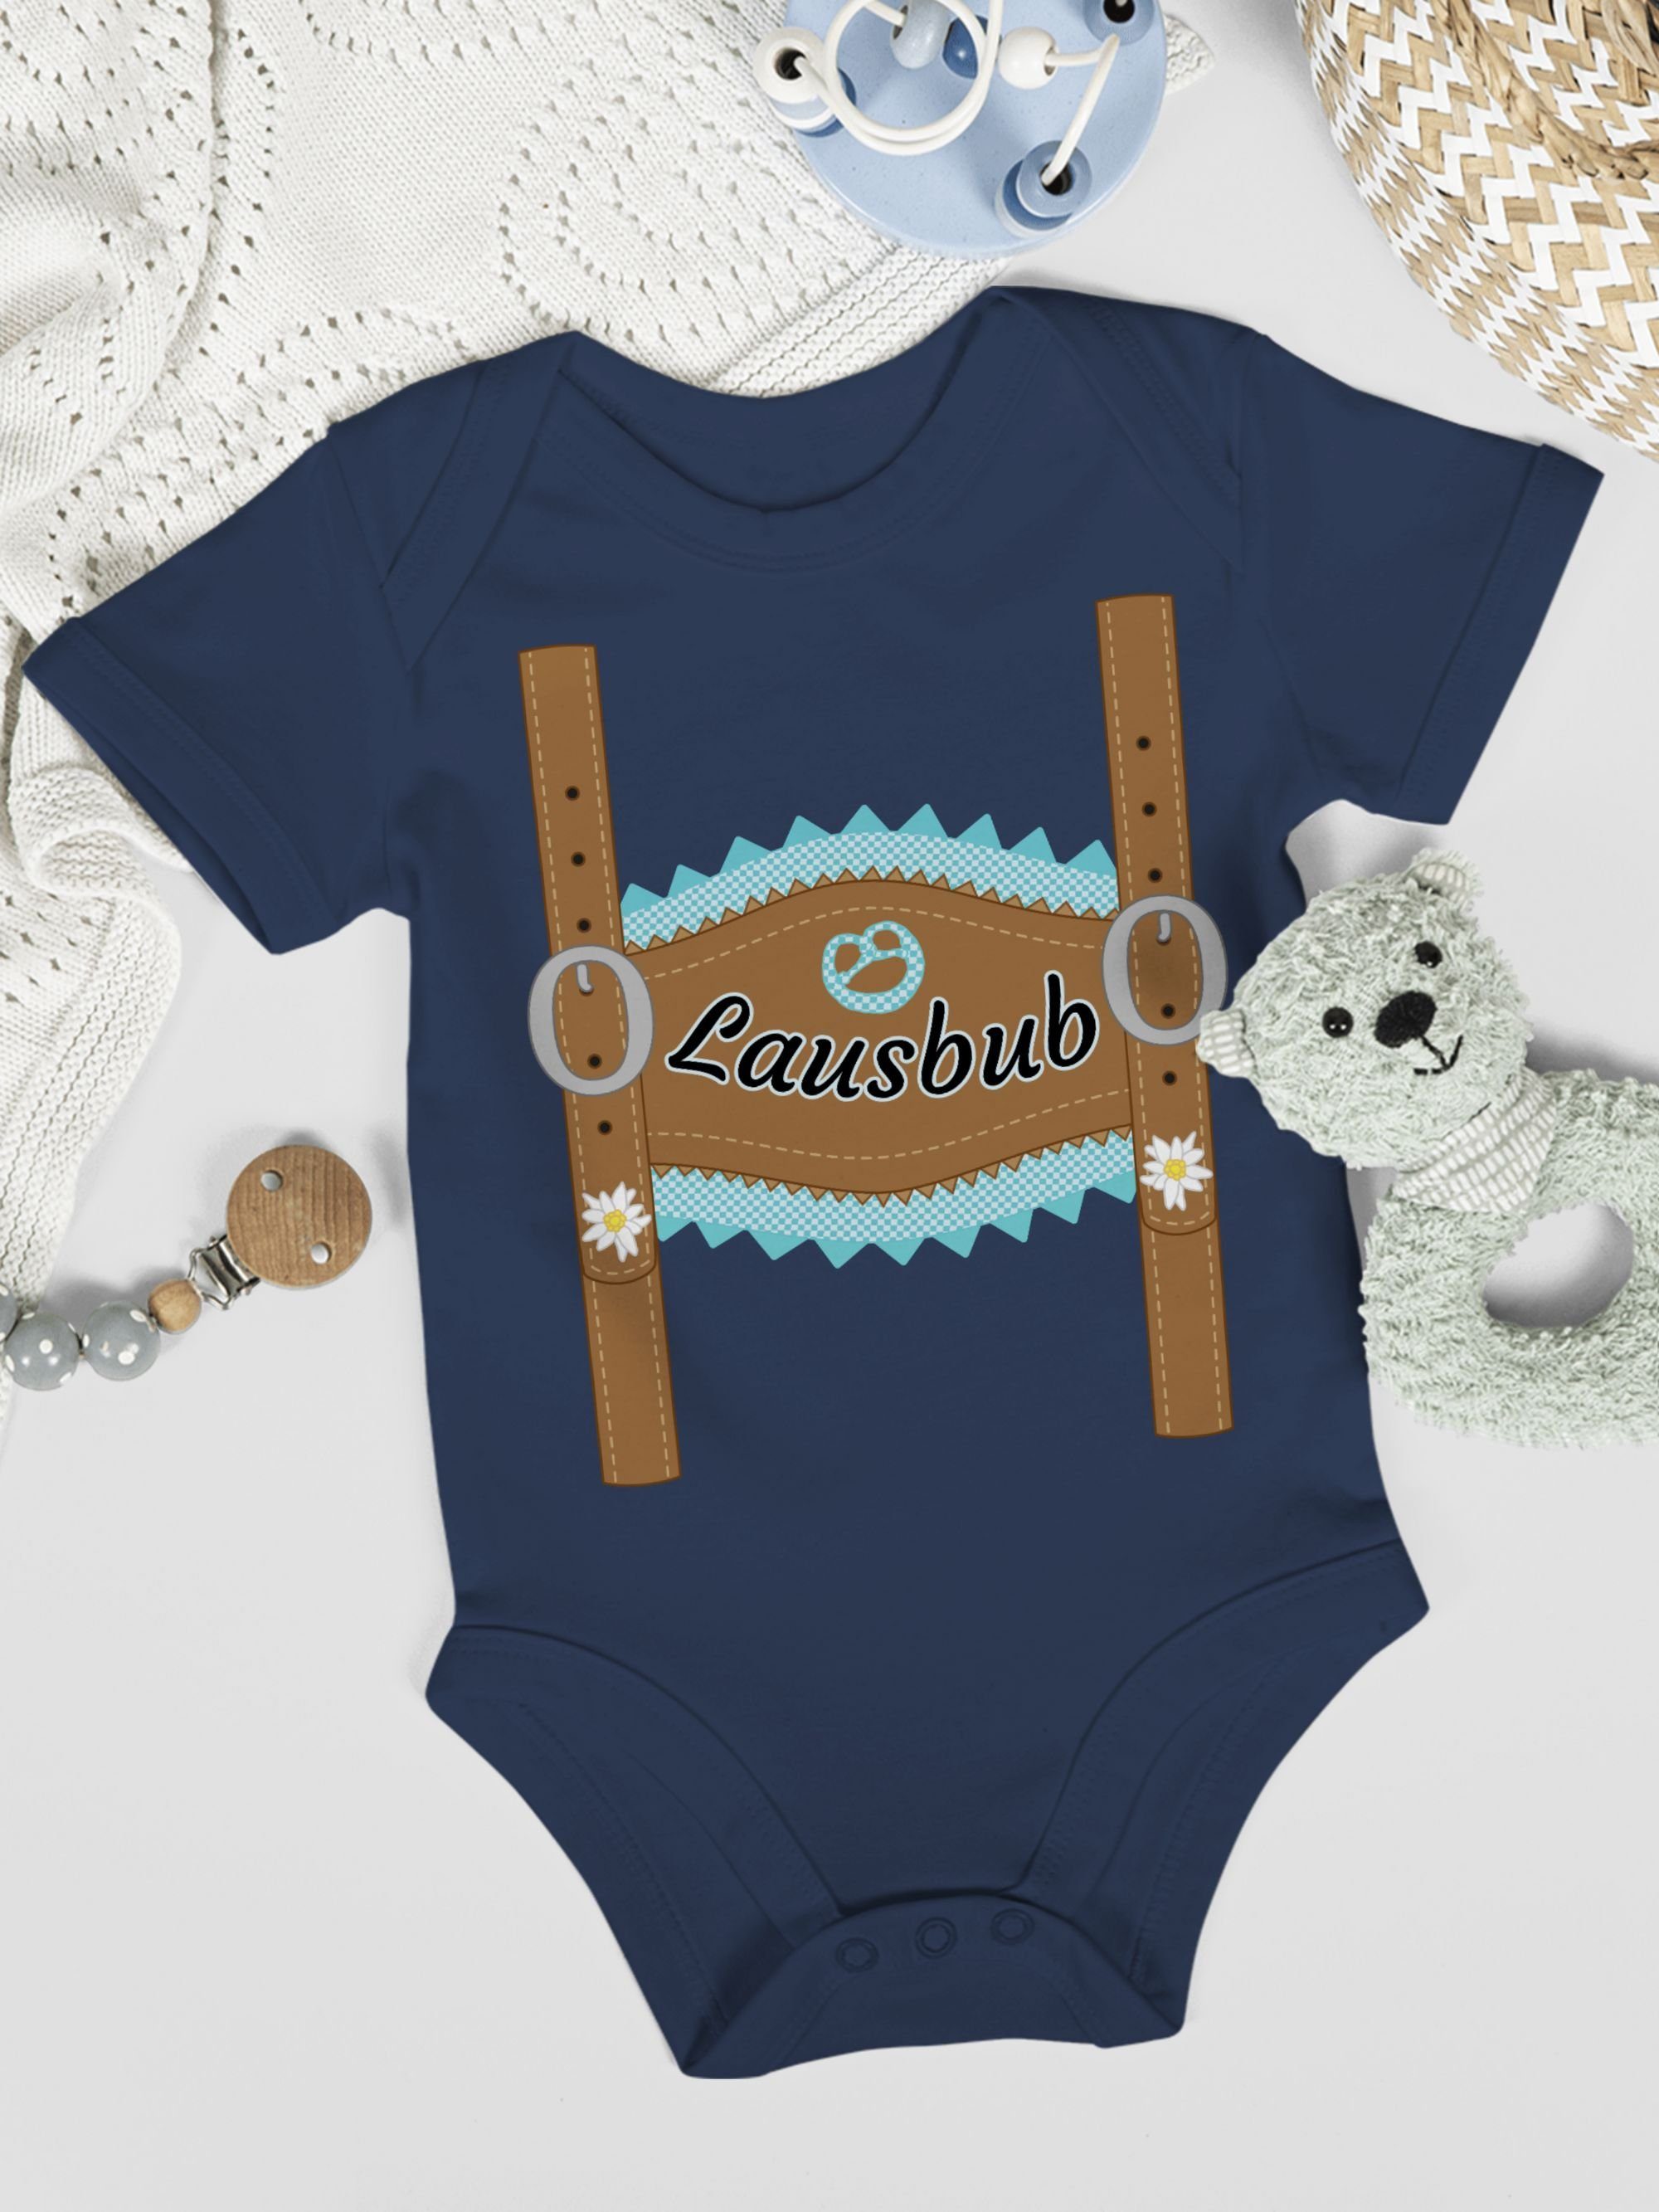 Lederhose Lausbub Outfit Oktoberfest Shirtbody Mode Navy Baby Blau 1 Shirtracer für